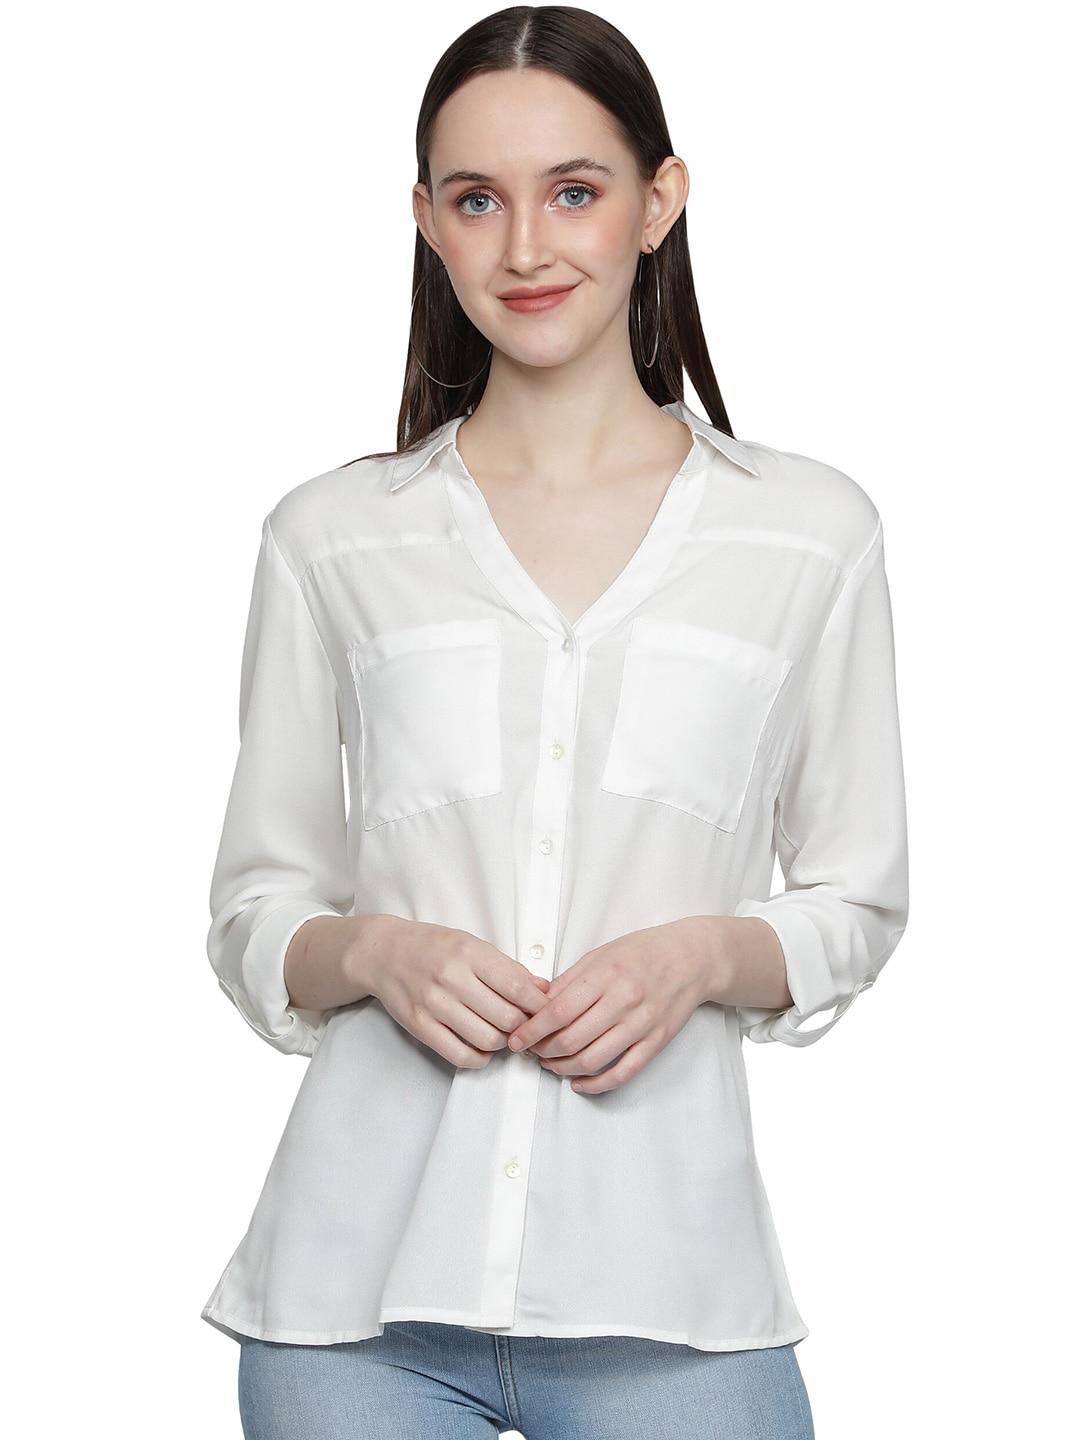 nuevosdamas women white solid shirt style crepe top